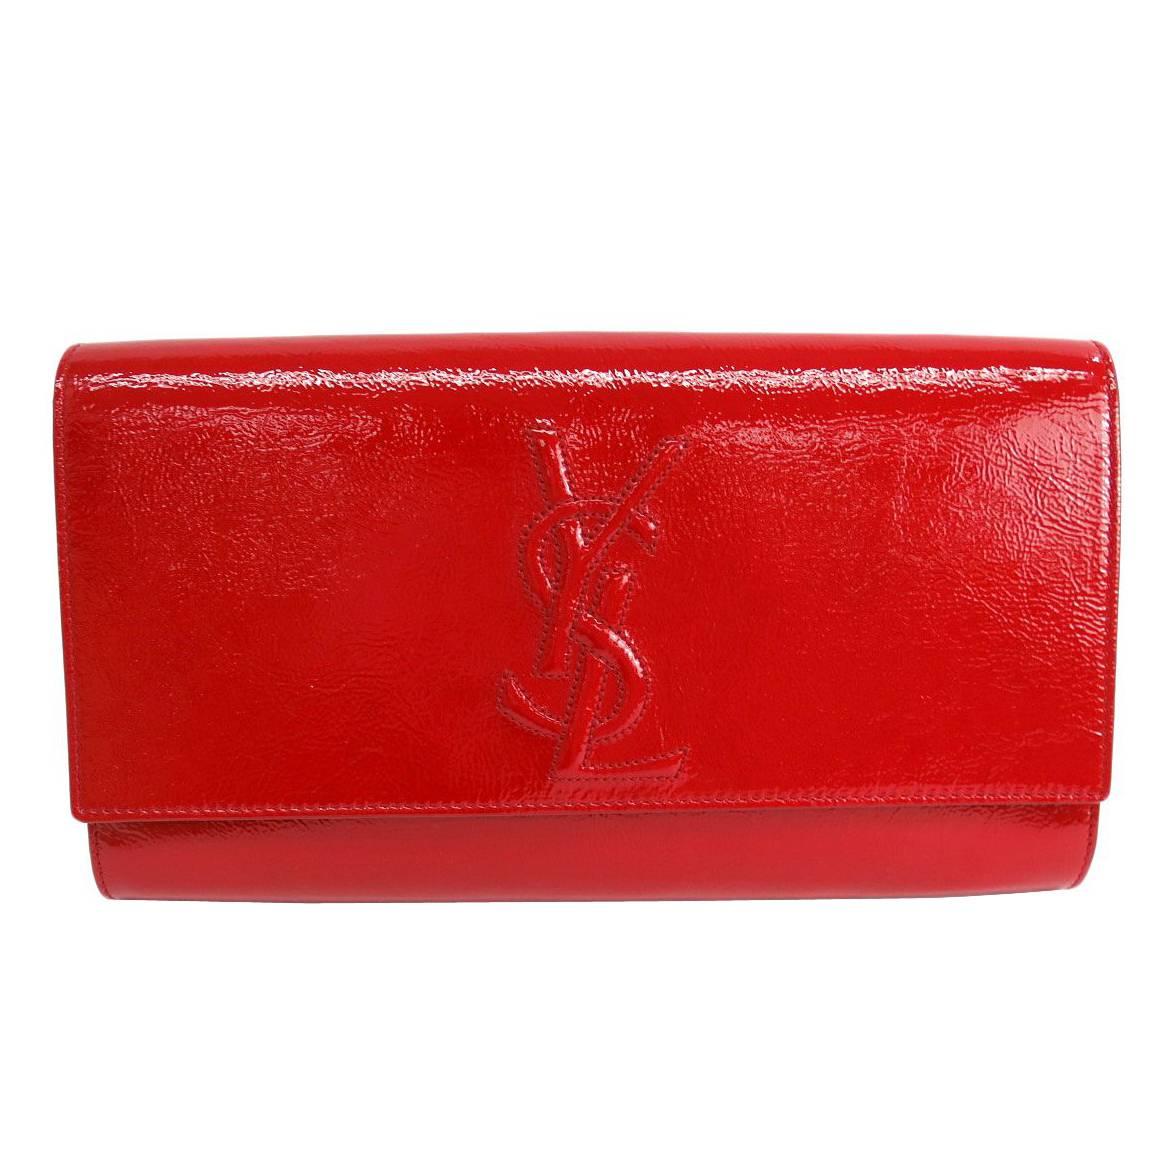 Yves Saint Laurent (YSL) Red Patent Leather Logo Envelope Flap Clutch Bag